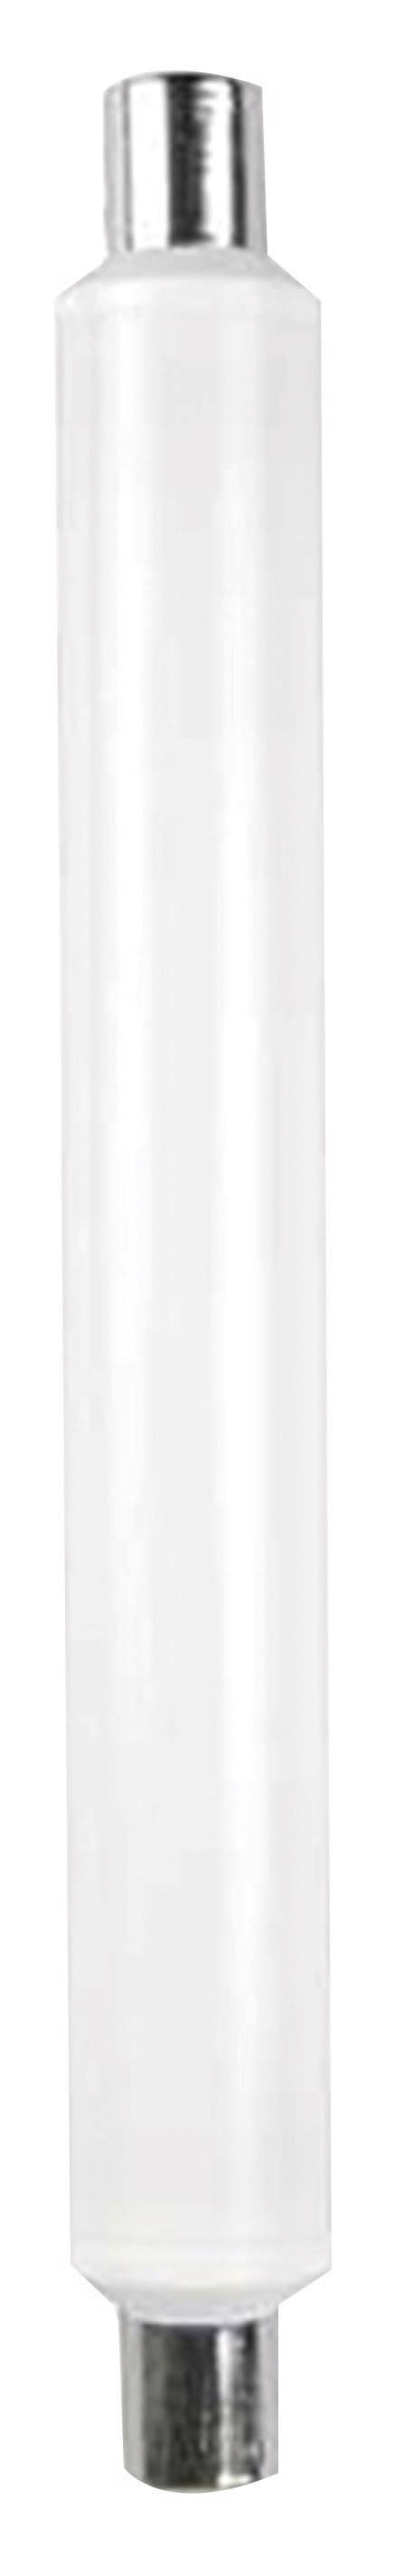 Girard Sudron - Rohren Linolite LED S15 221mm 3,5W 2700k 320Lm 3125469971030